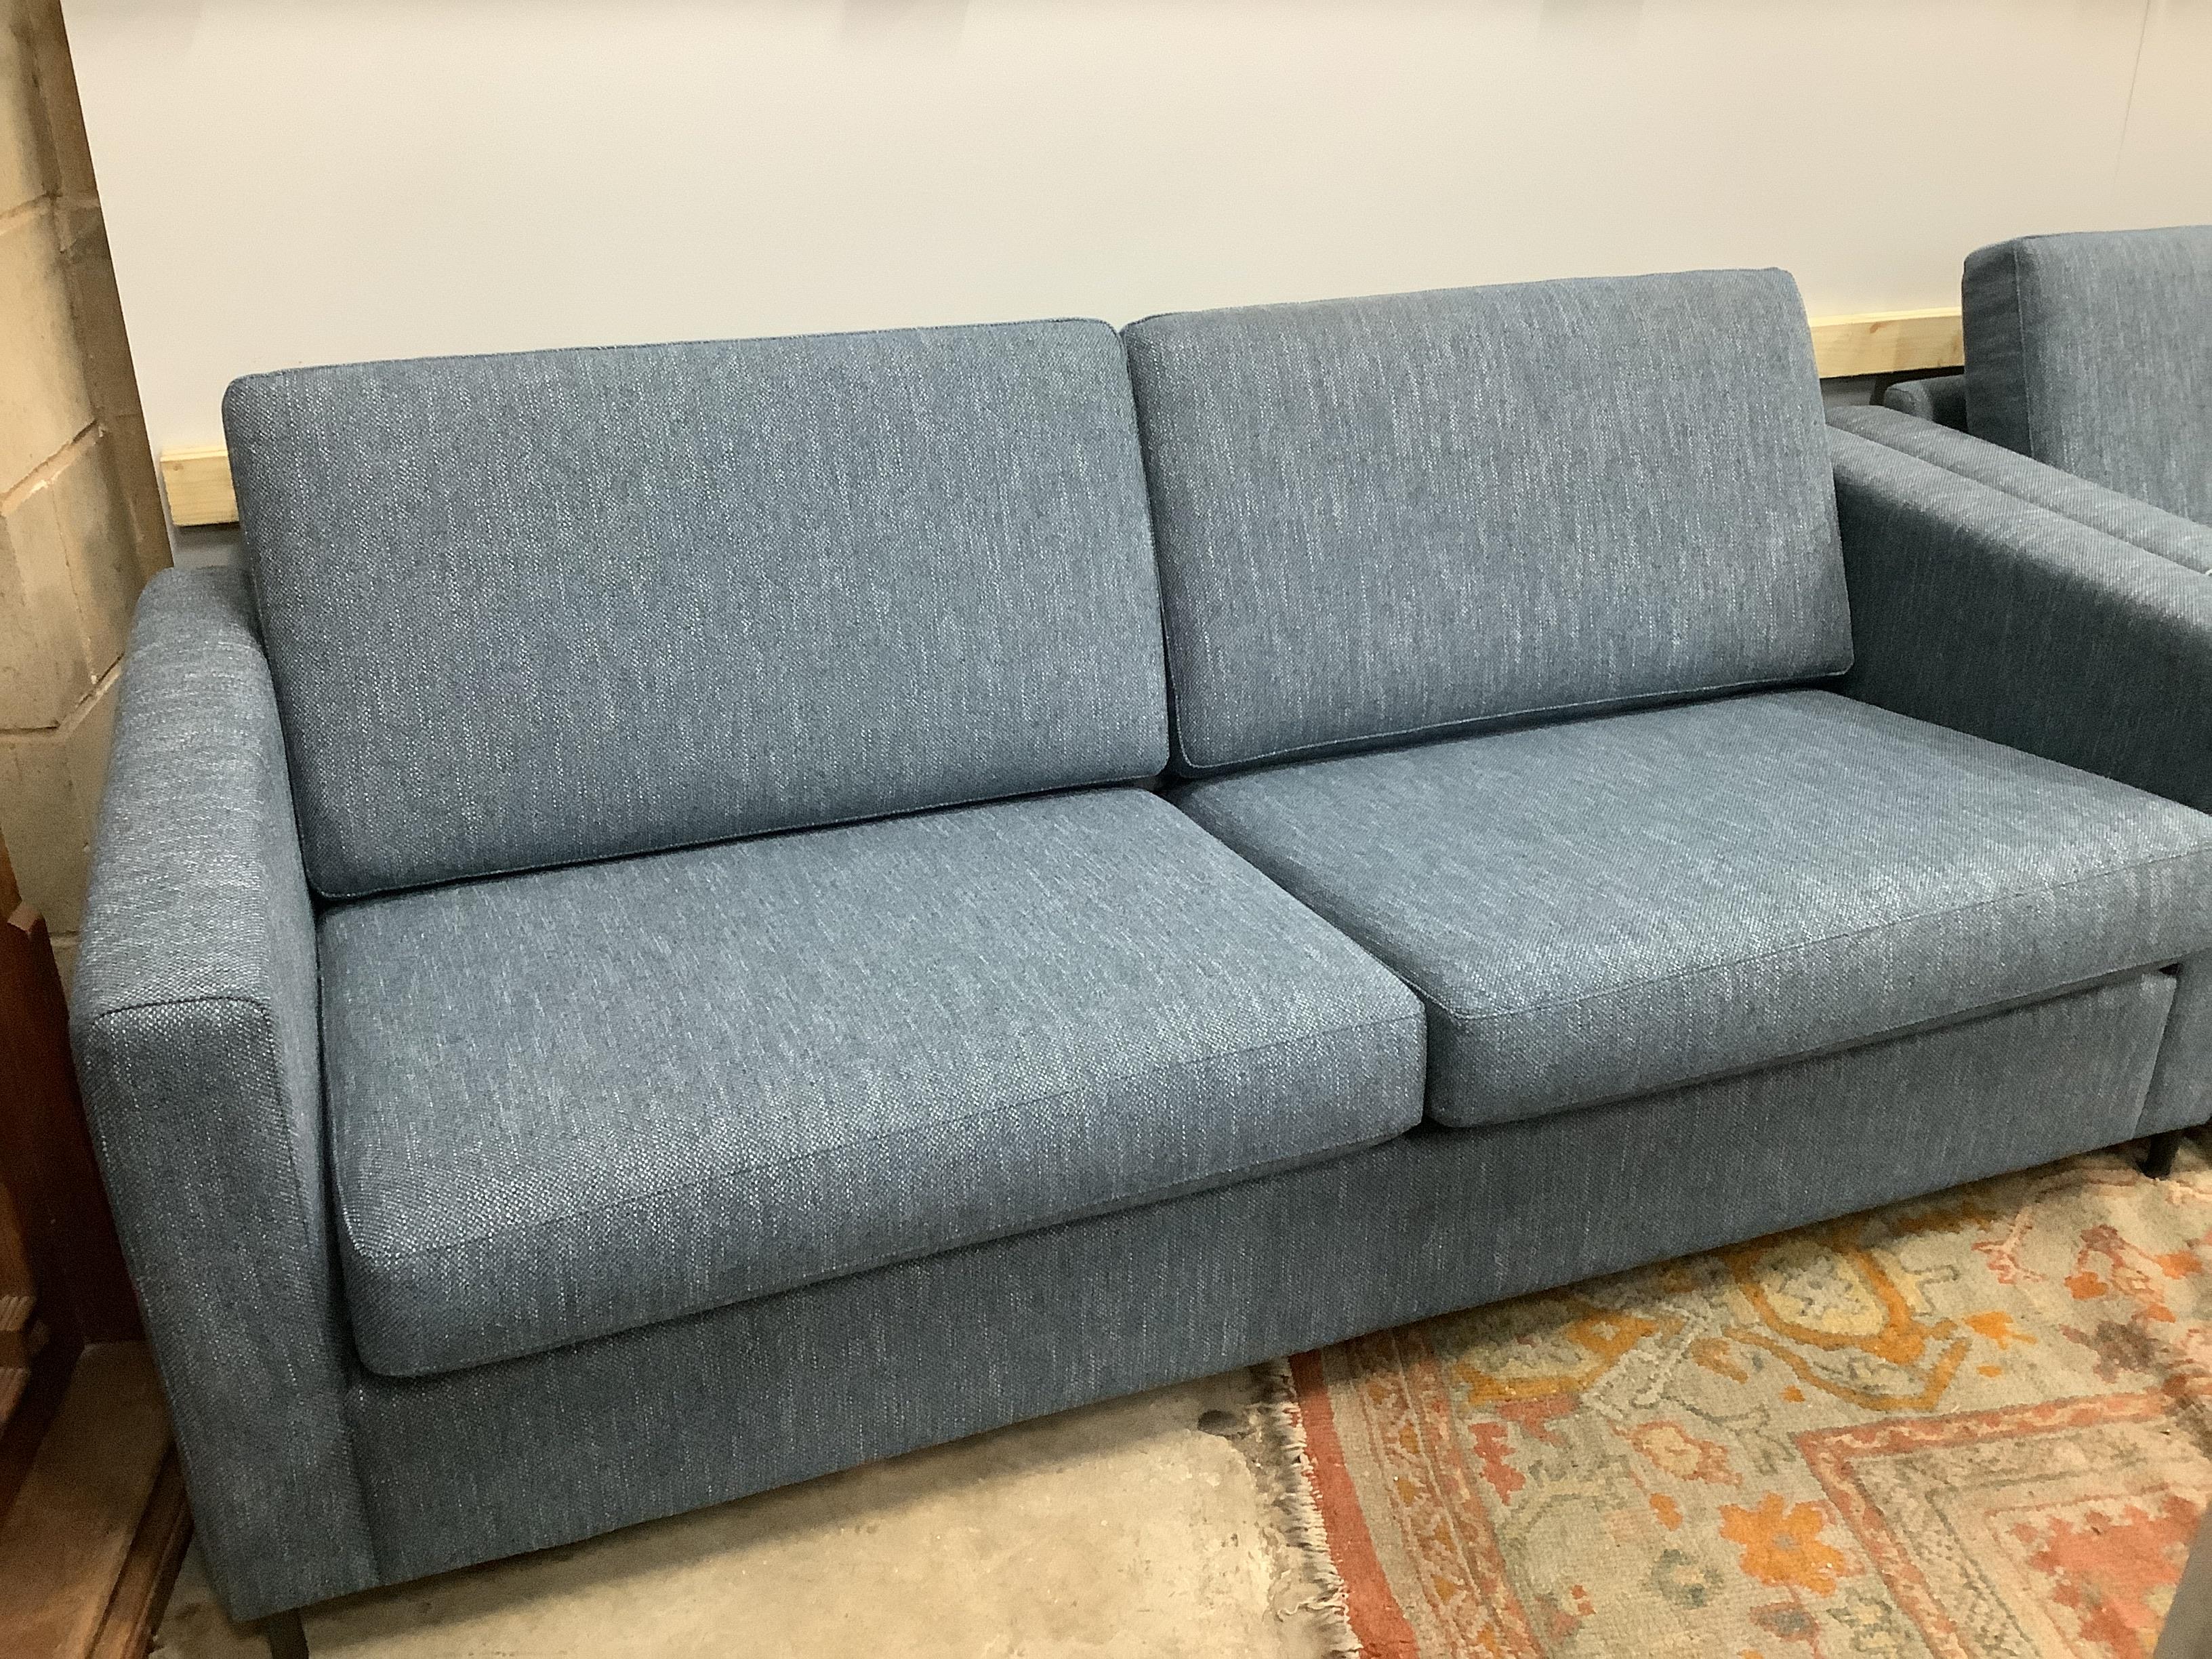 A pair of Sits Scandinavian design sofas, Eton model, width 192cm, depth 84cm, height 80cm